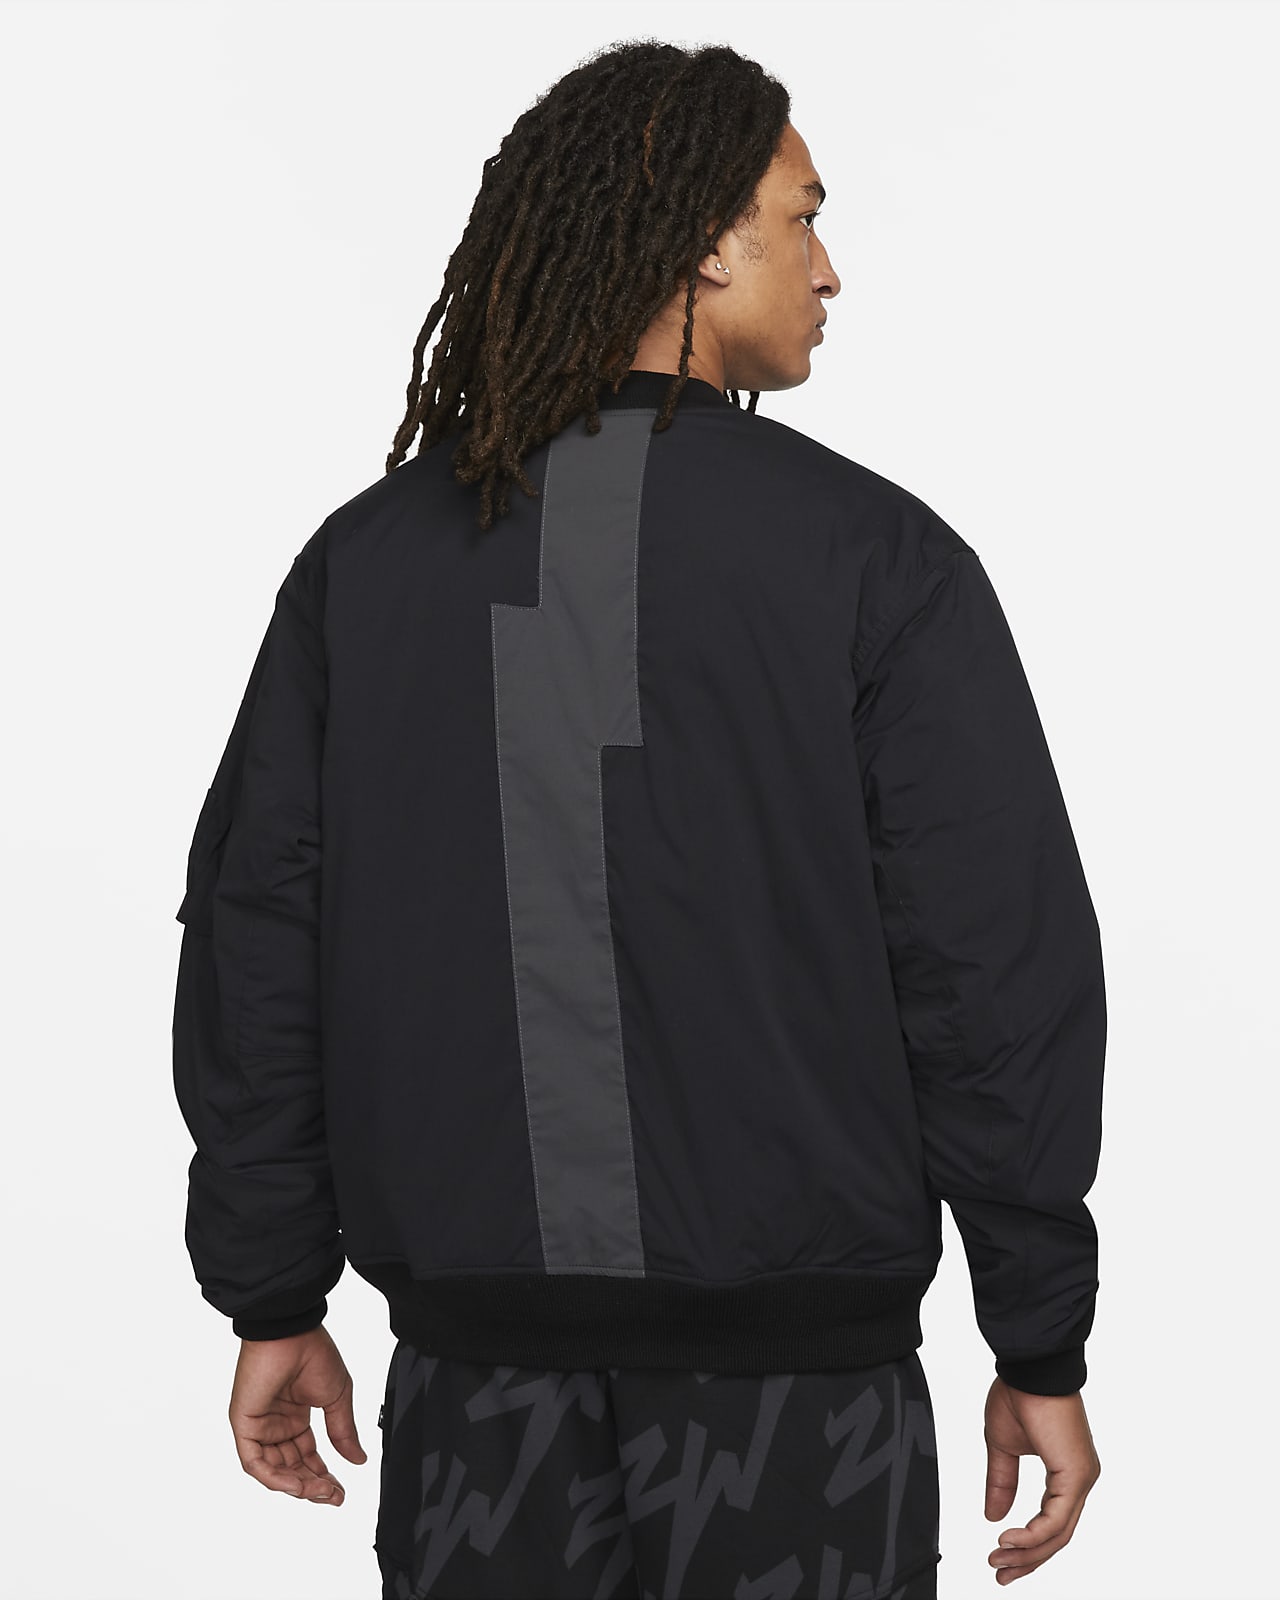 Zion Men's Flight Jacket. Nike.com